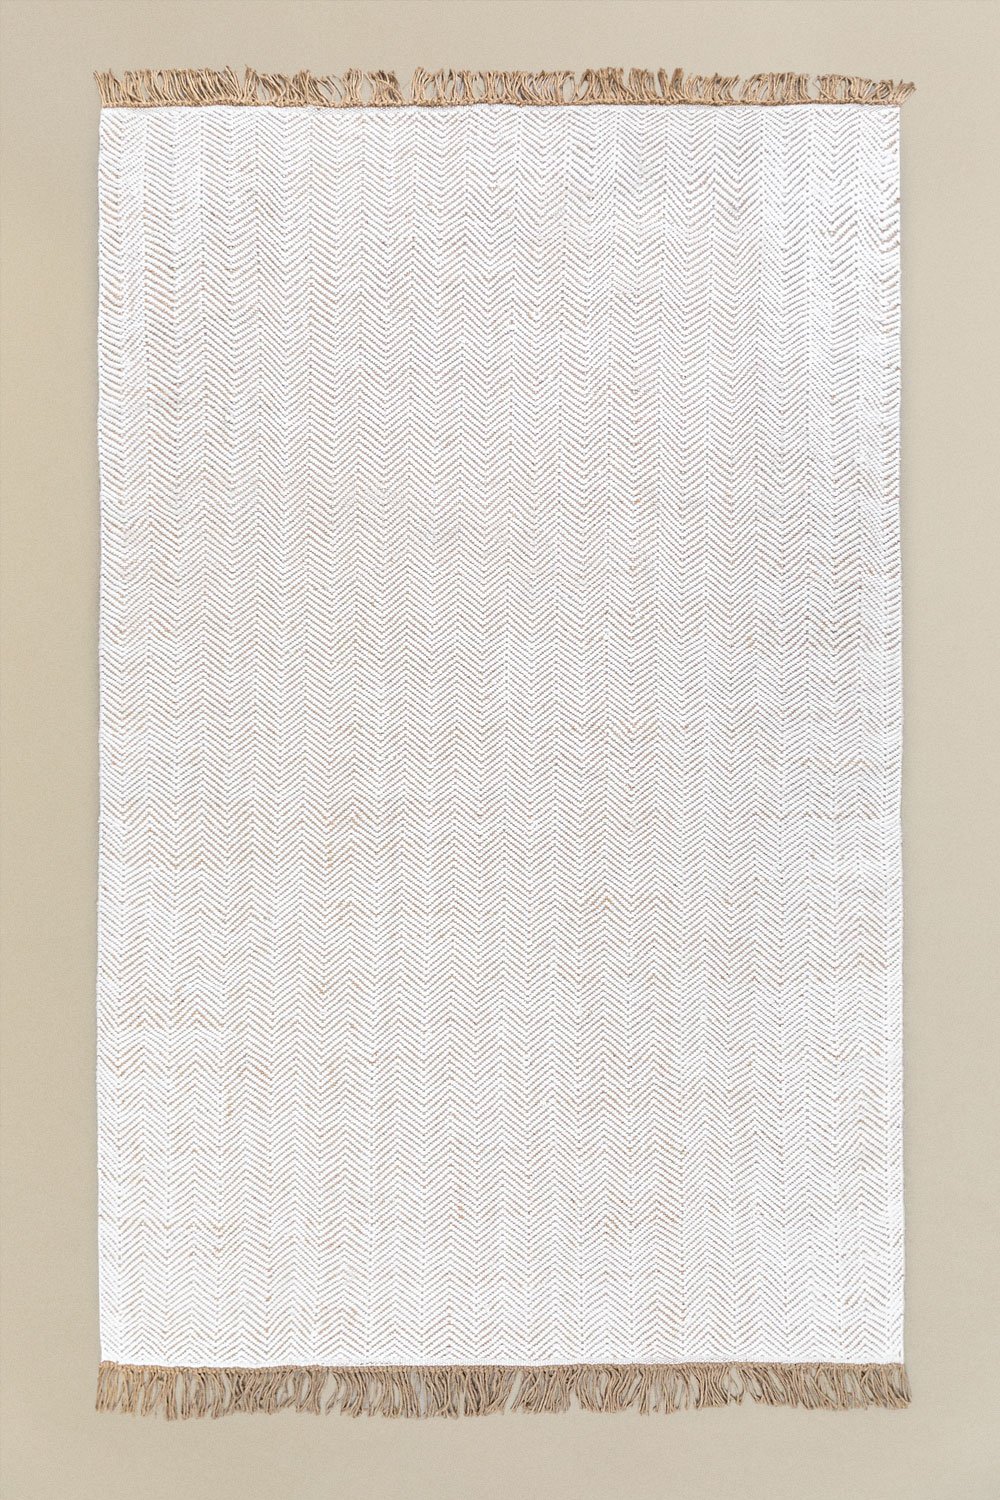 Tapis en jute (300x200 cm) Maxandra, image de la galerie 1